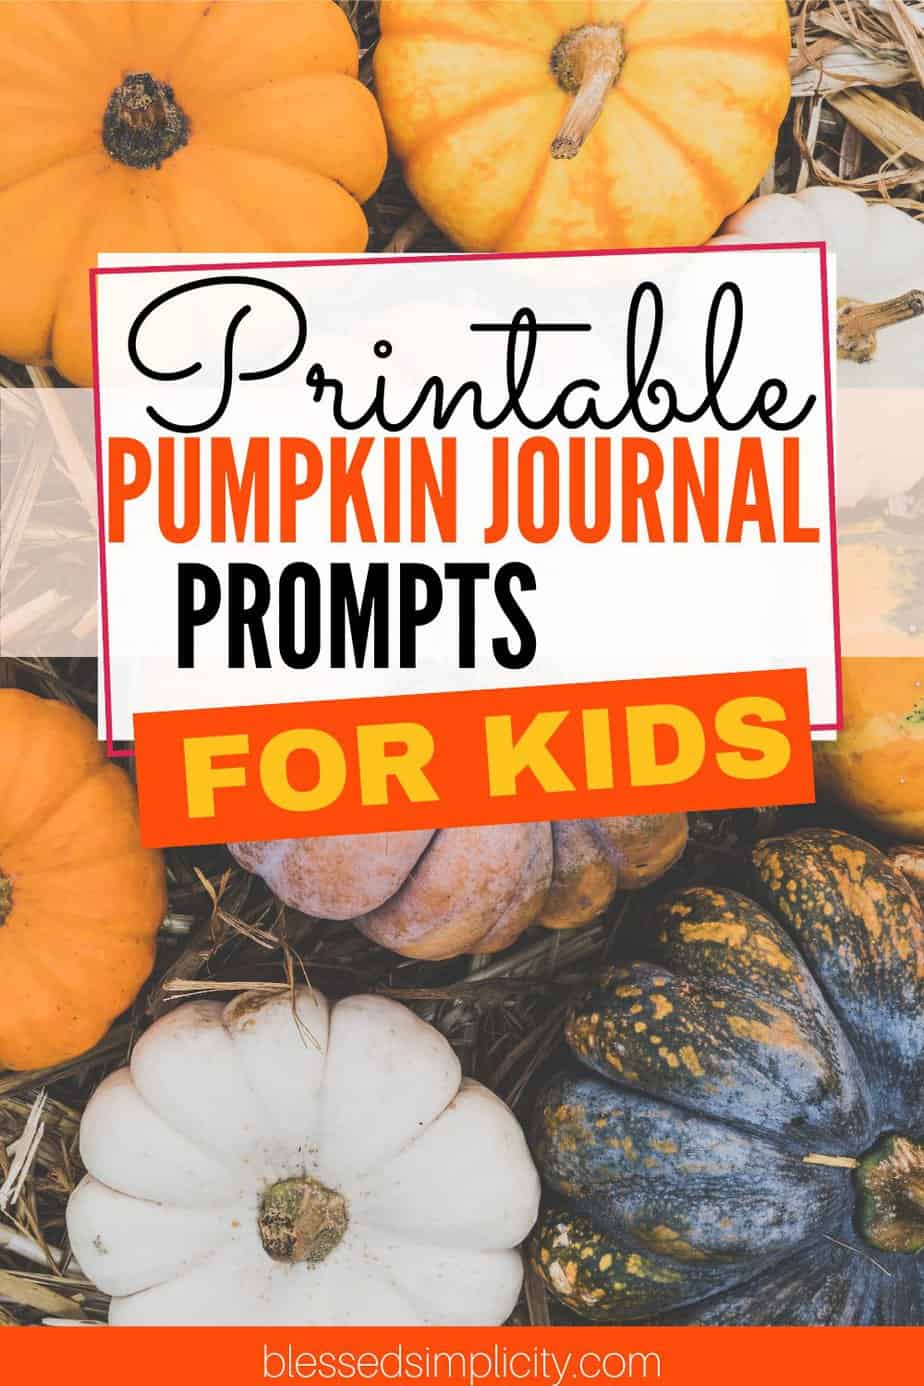 Pumpkin Journal Prompts for Kids